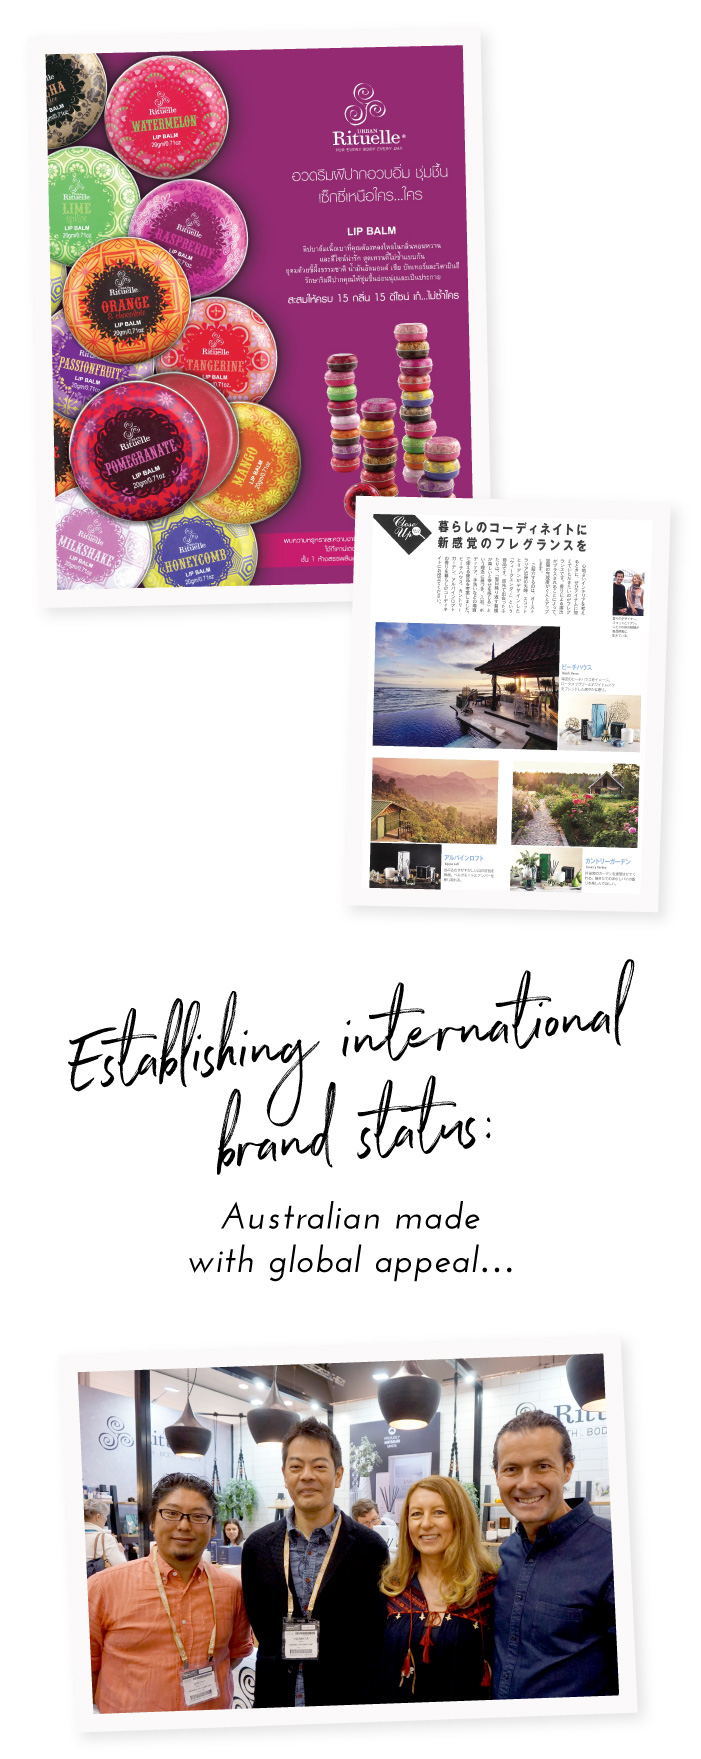 Establishing international brand status: Australian made with global appeal...